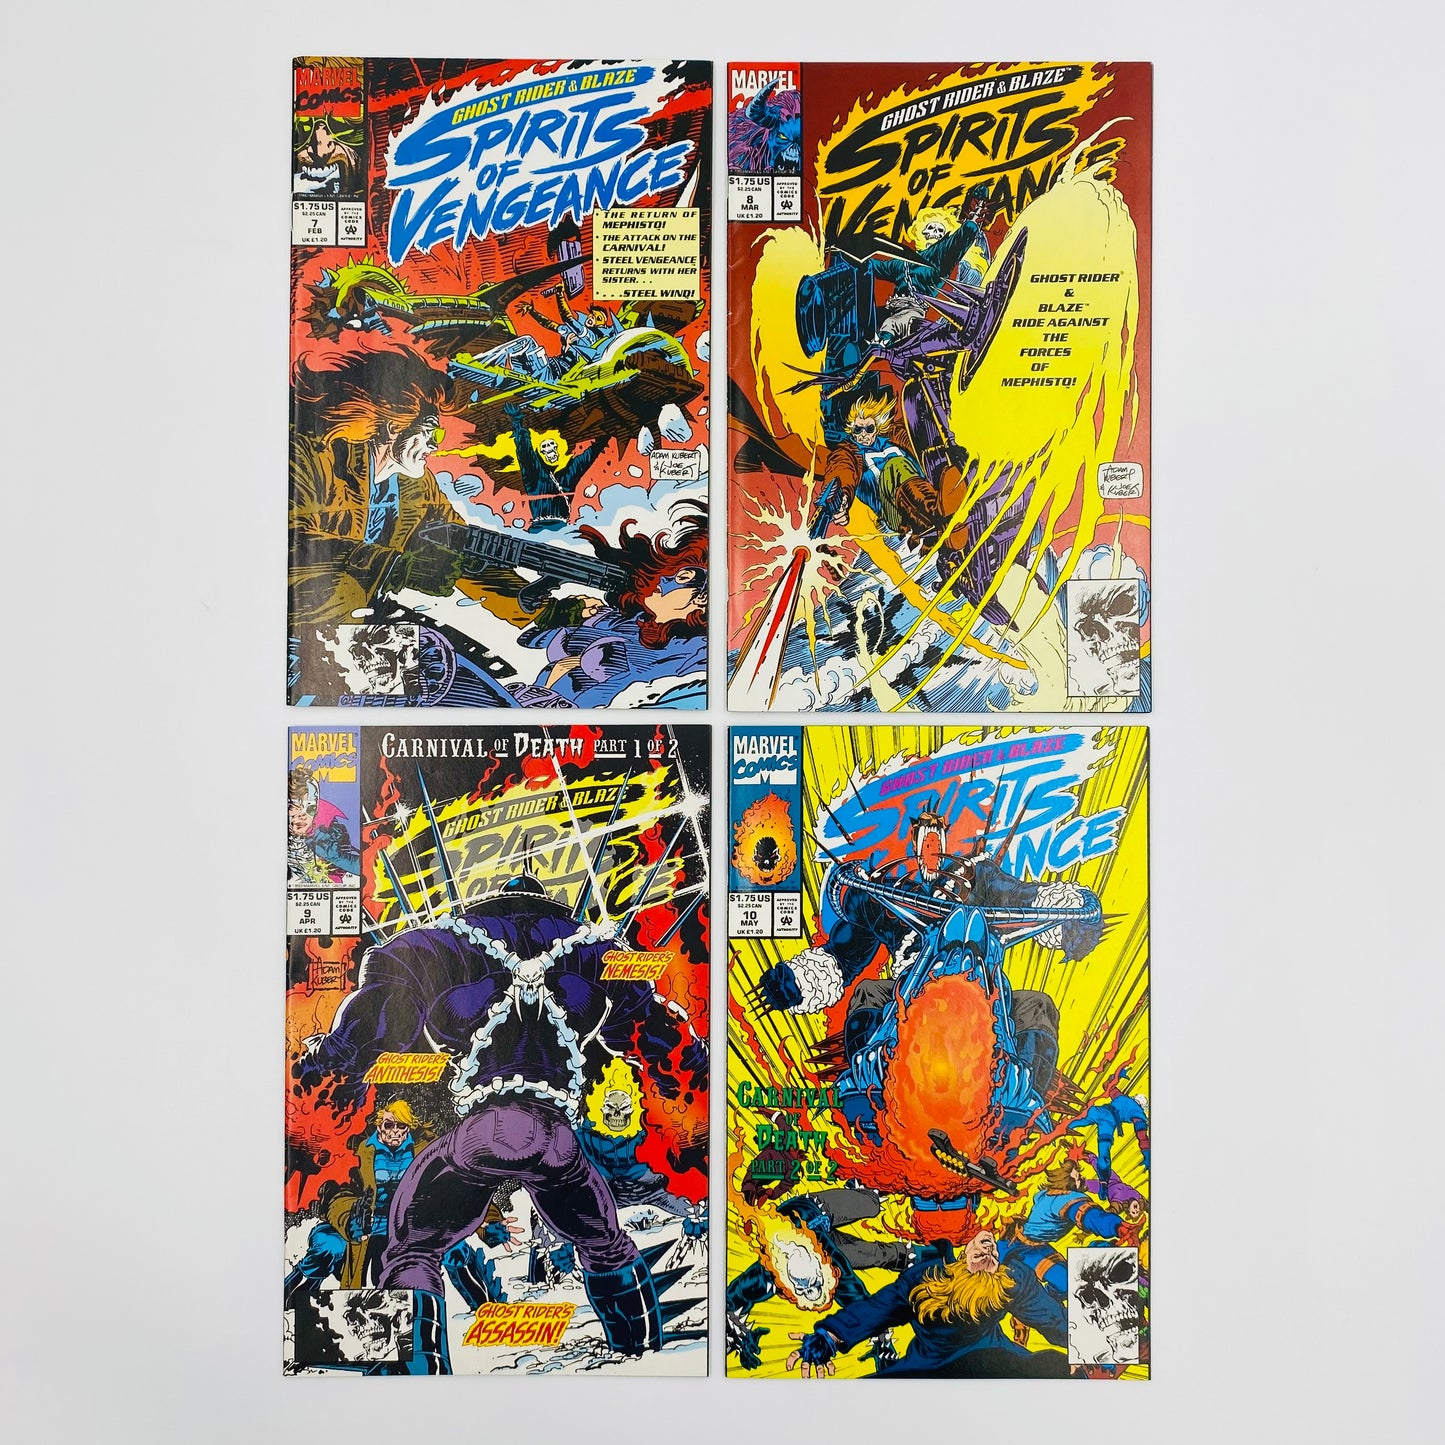 Ghost Rider & Blaze Spirits of Vengeance #1-23 (1992-1994) Web of Spider-Man #95 & 96 (1992-1993) Gun Runner #1 (1993) Marvel